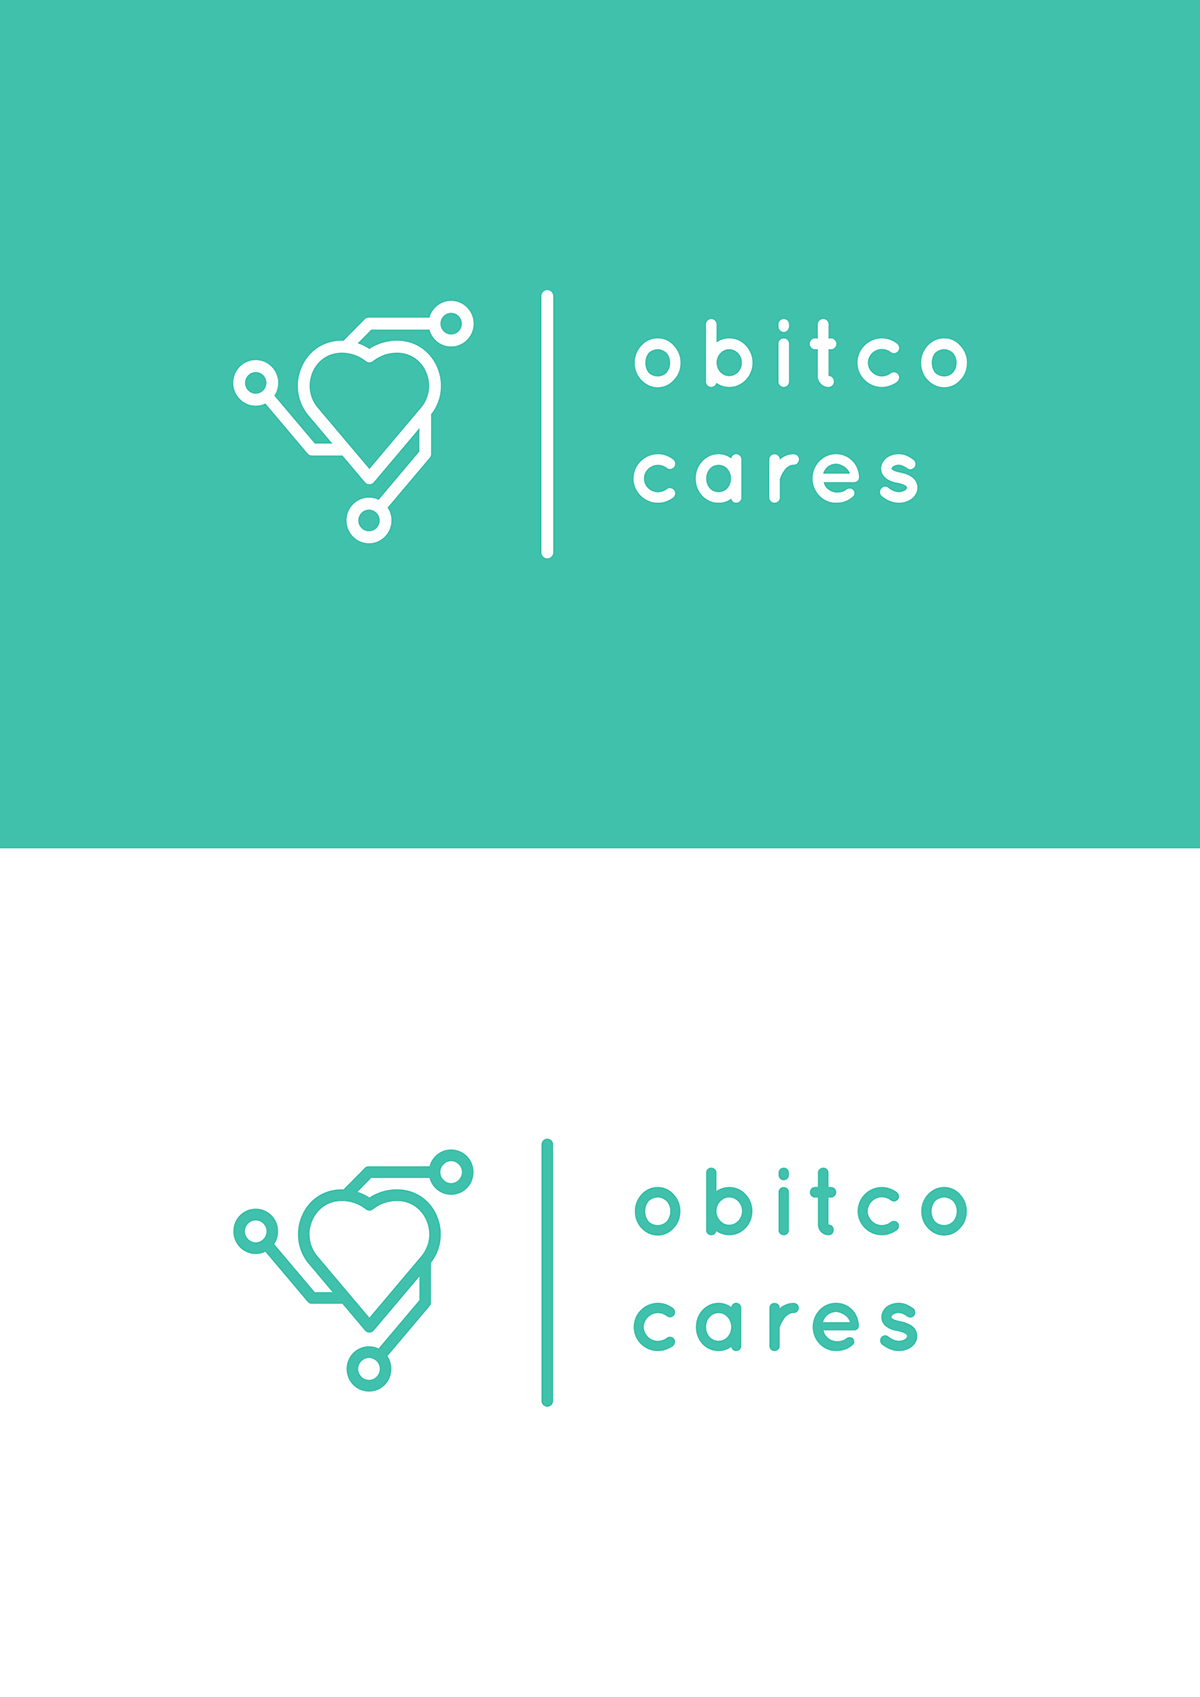 obitco cares logo identity recycle non-profit organization